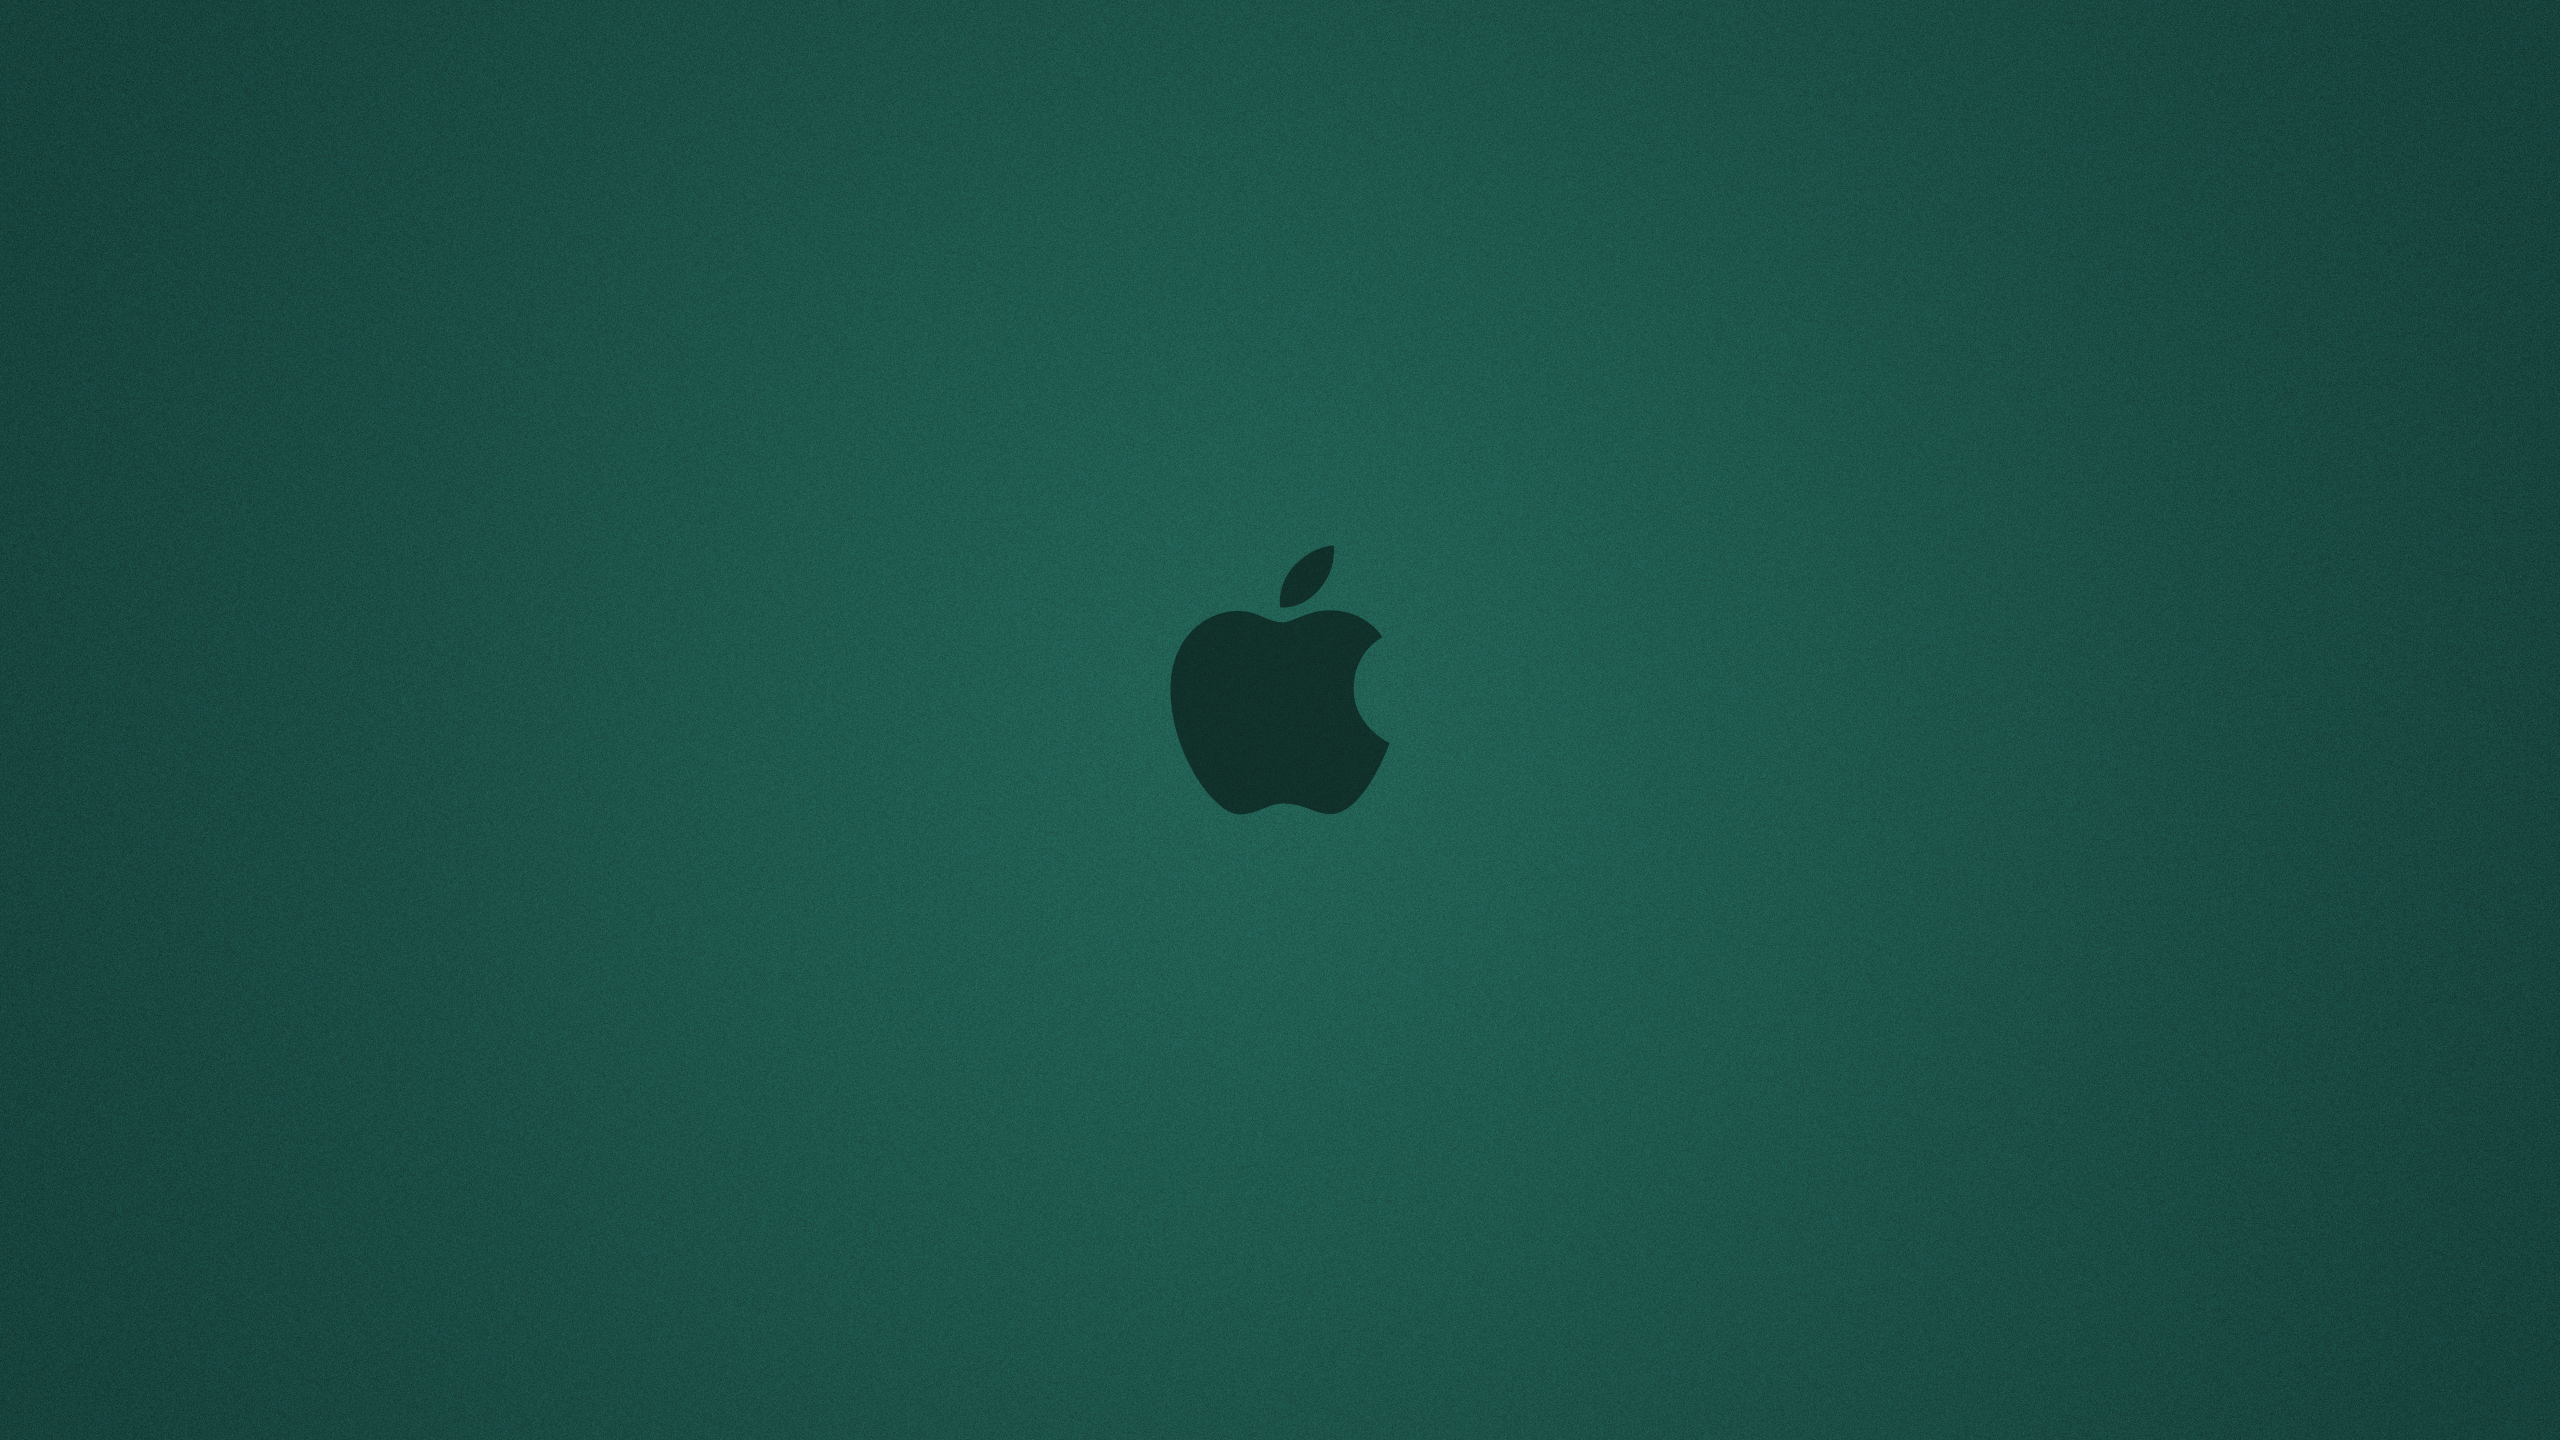 Cyan Apple Background Desktop Pc And Mac Wallpaper